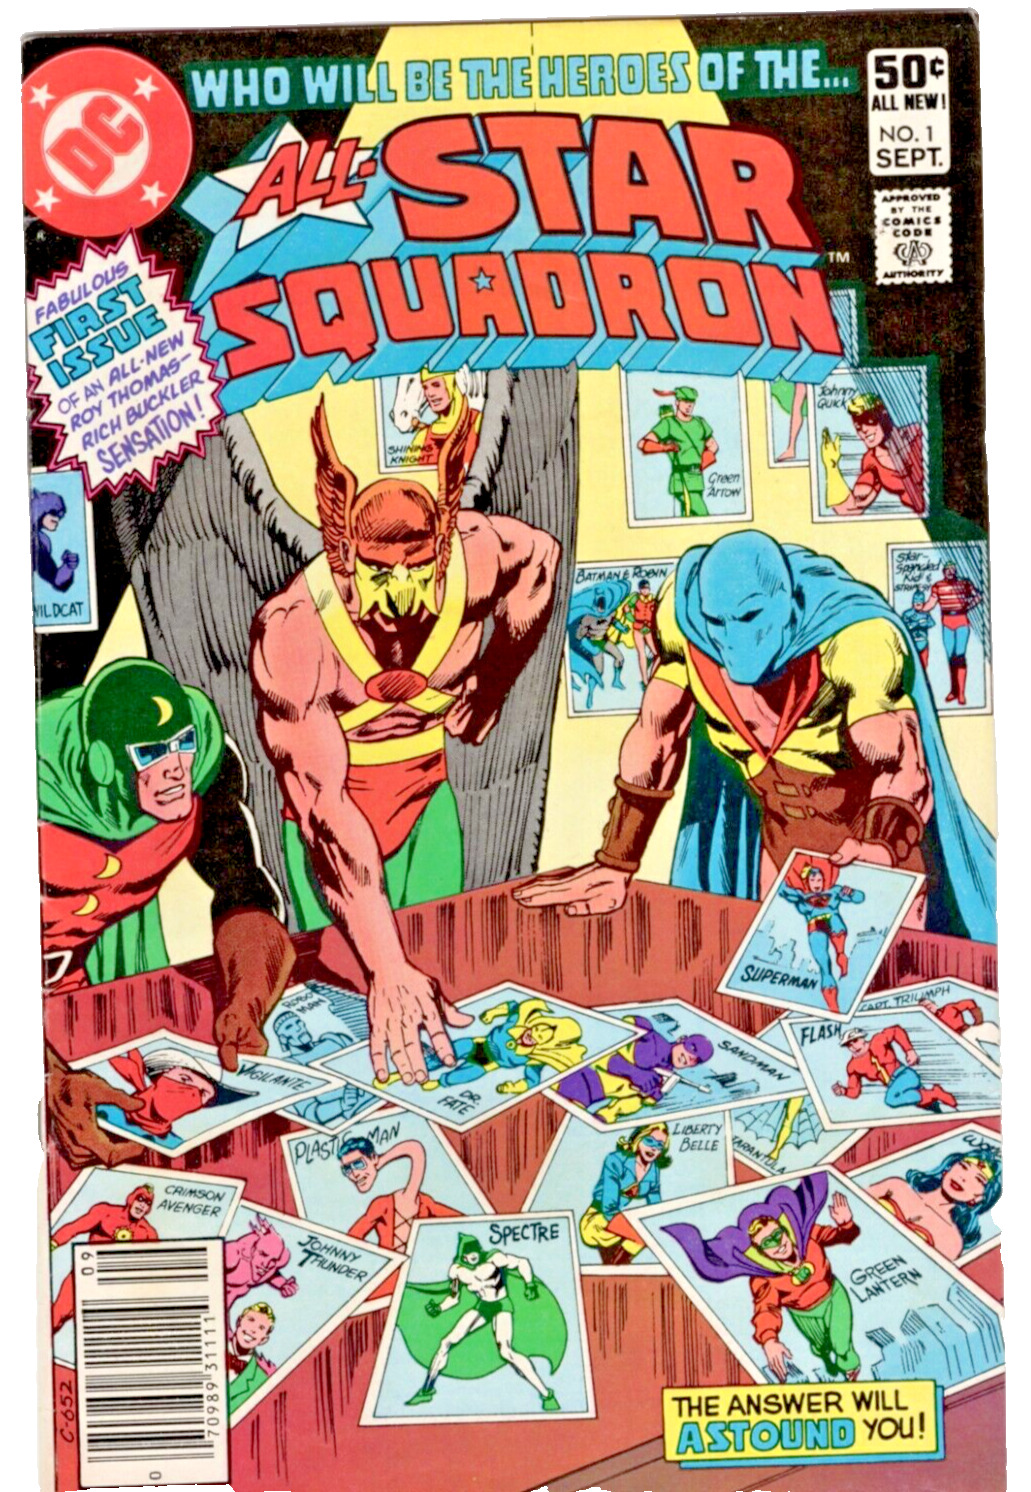 All Star Squadron #1 (Sep. 1981, DC)